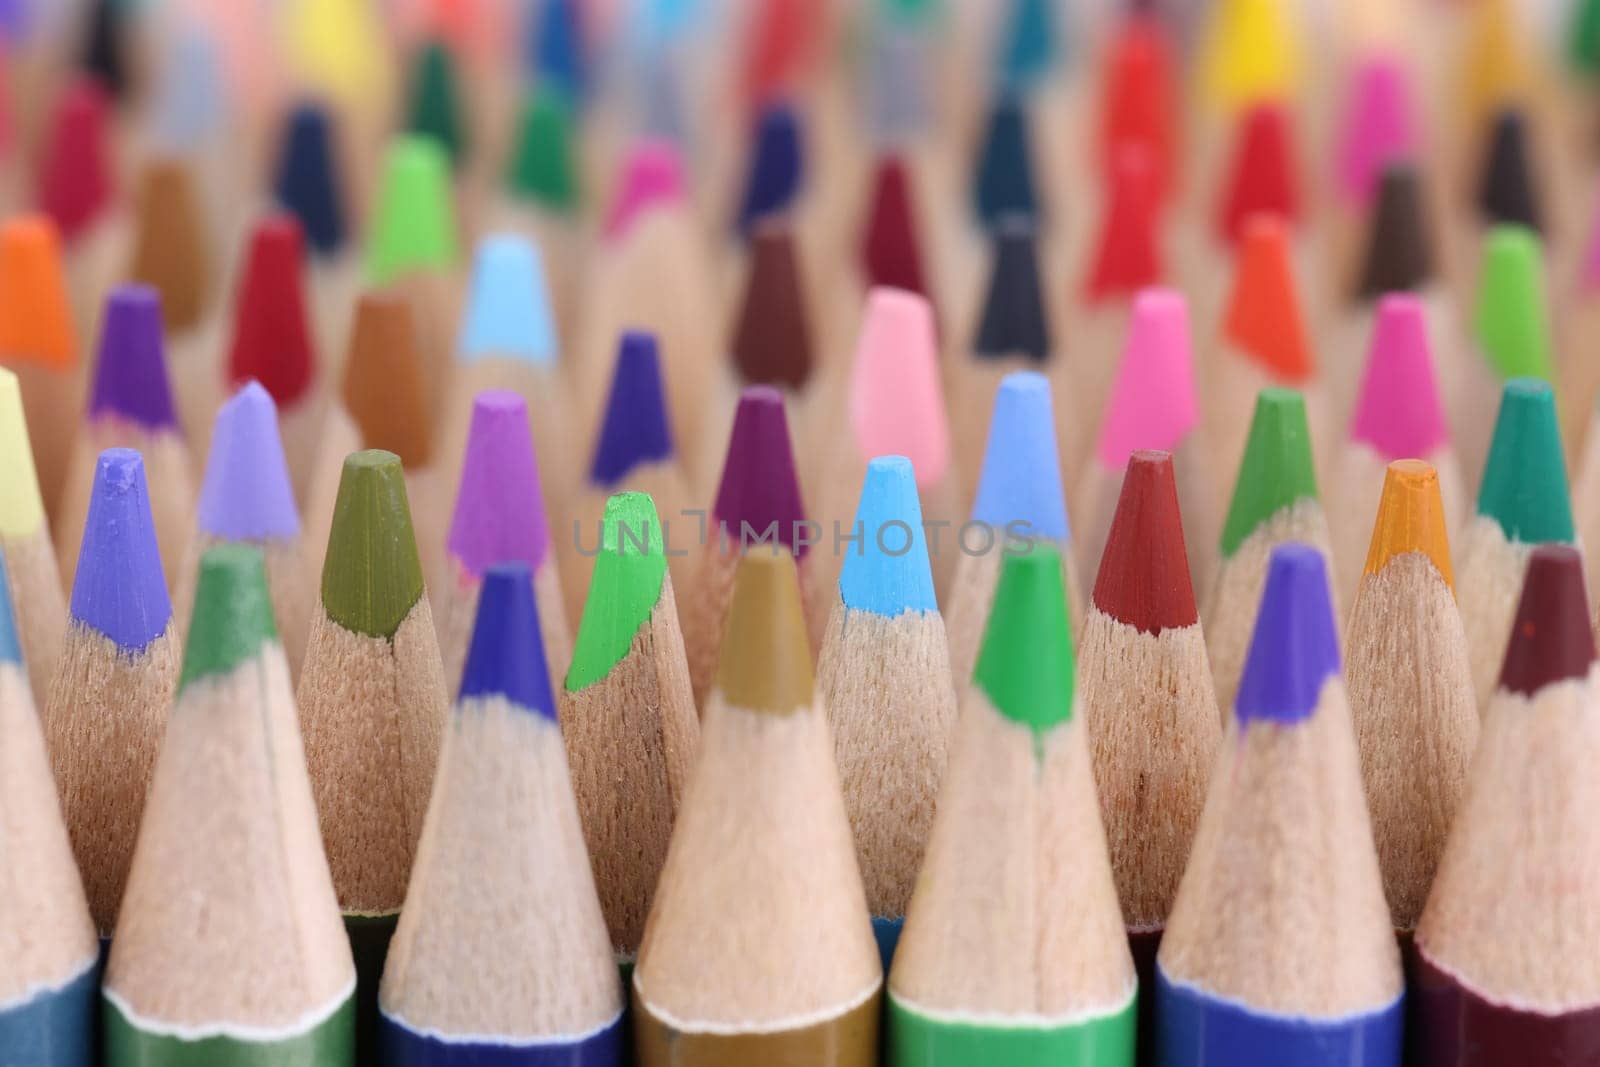 Sharp colored pencils closeup. Set of colorful pencils creativity artistic skill and school. Drawing imagination and fantasy make world bright and impressive concept